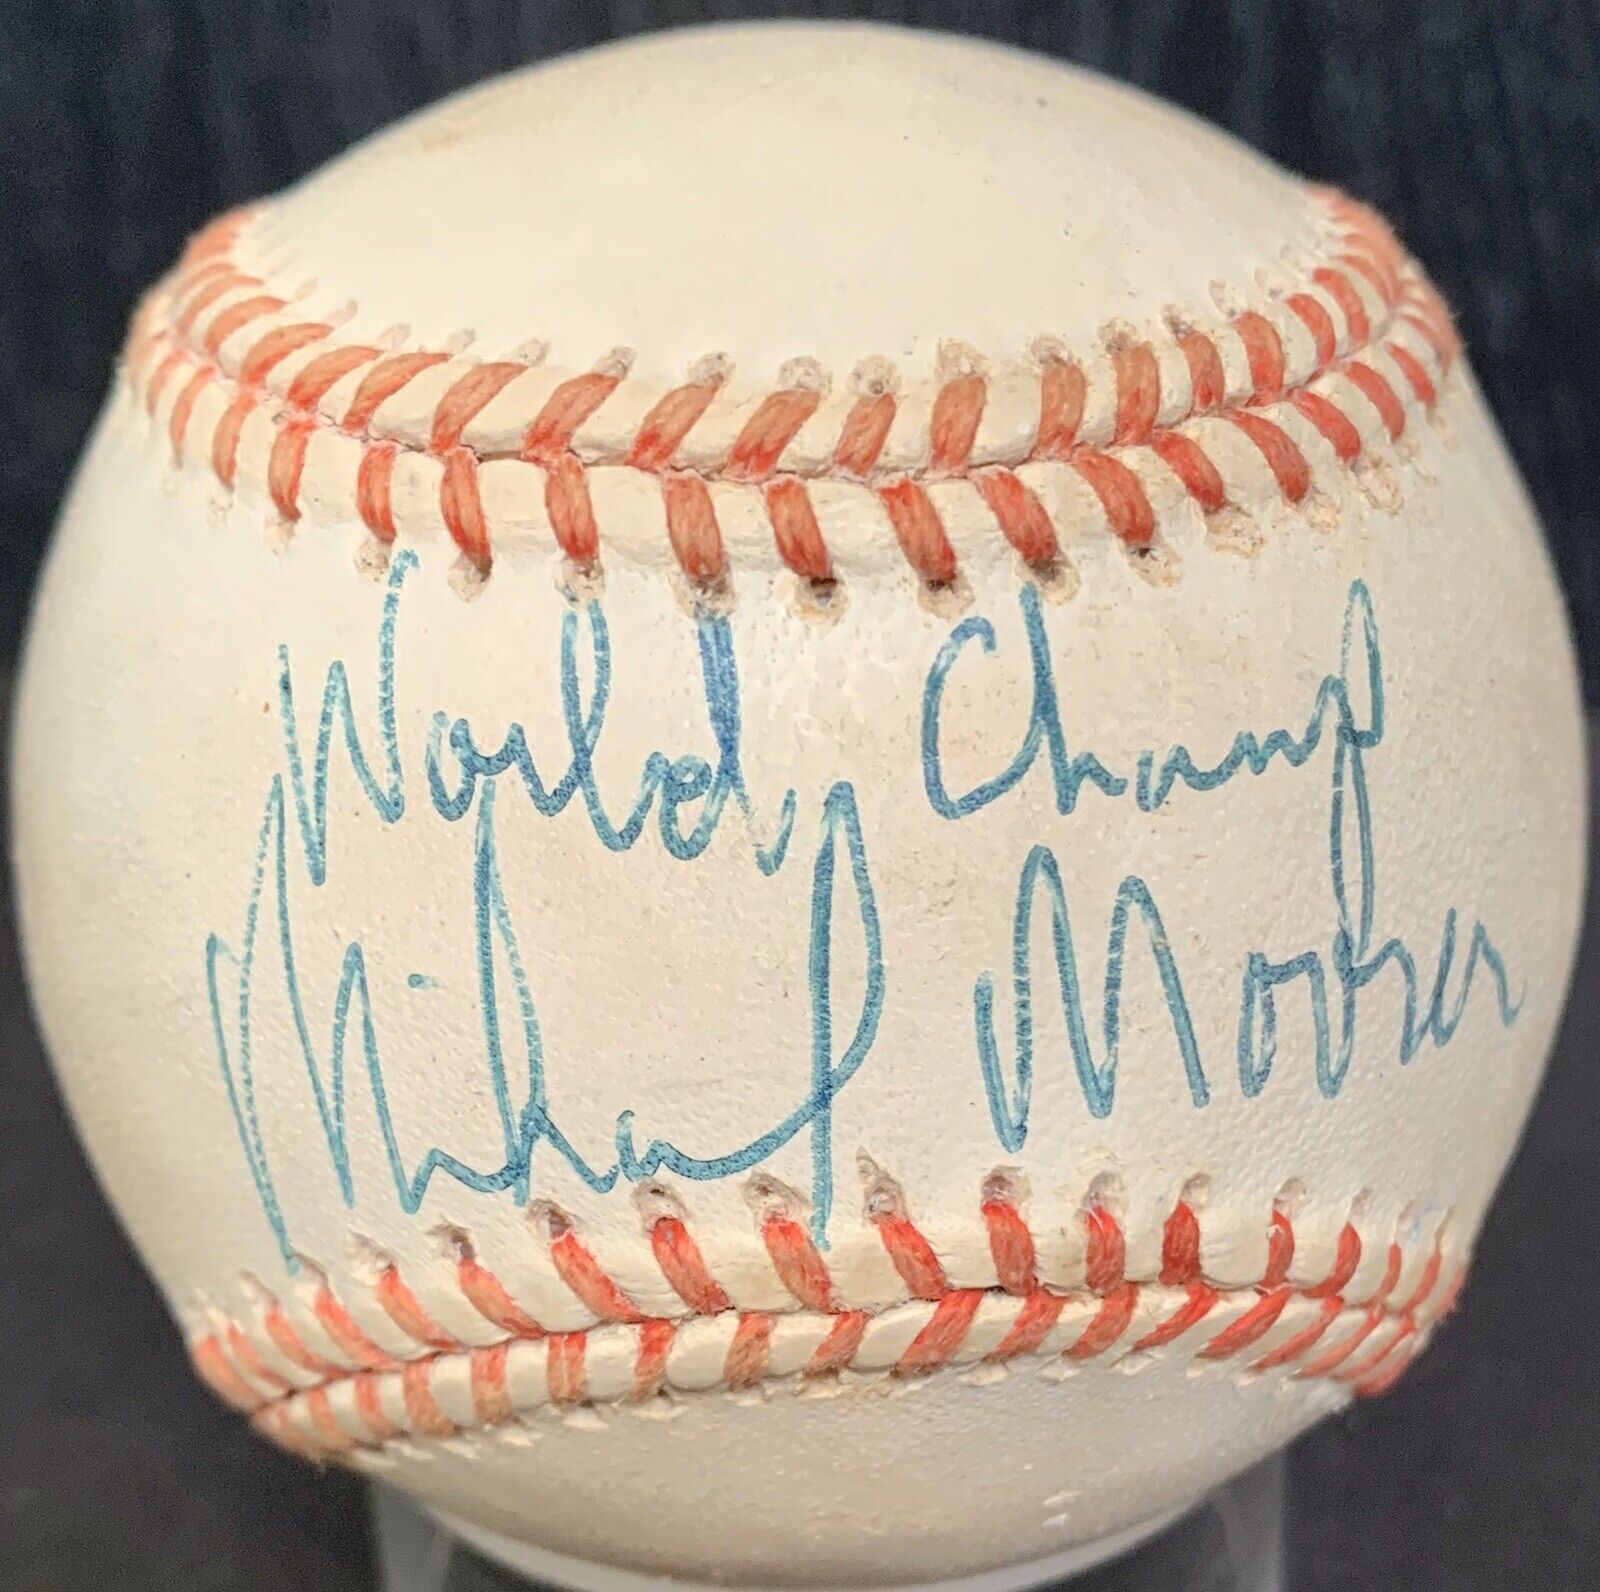 RARE Michael Moorer Heavyweight Champion Of World JSA Authentic Signed Baseball